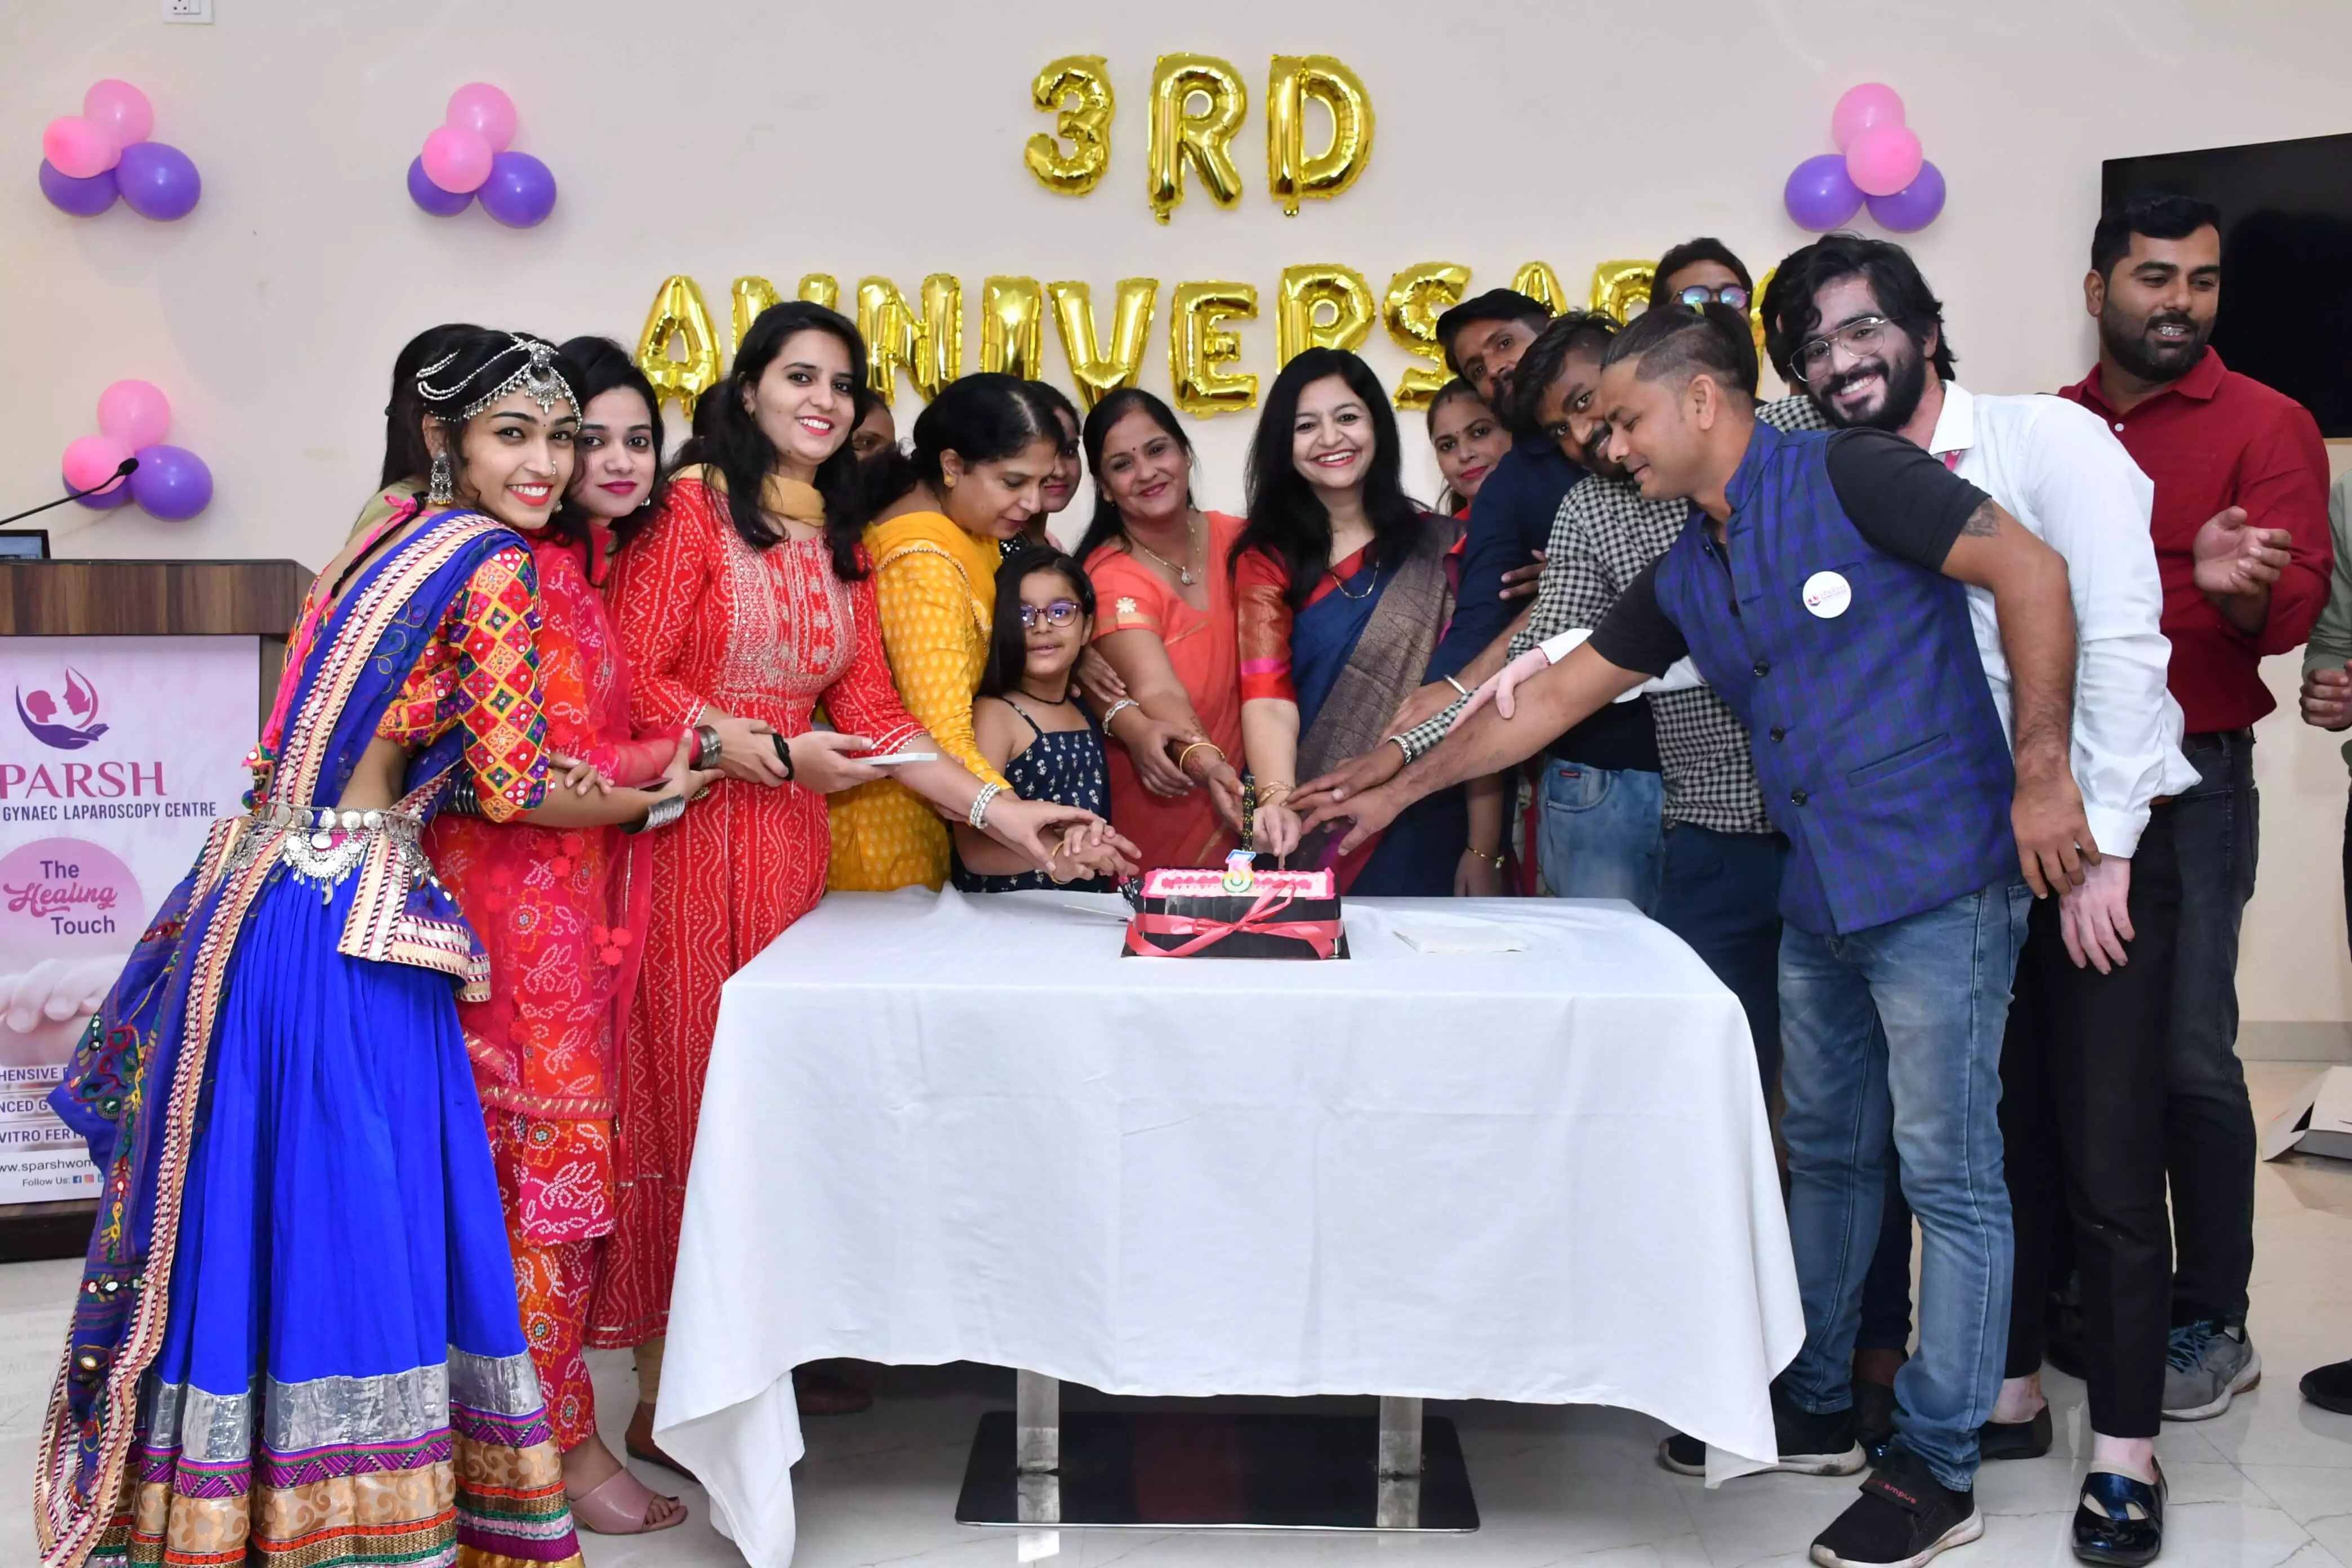 sparsh-team-udaipur-3rd-anniversary-celebration